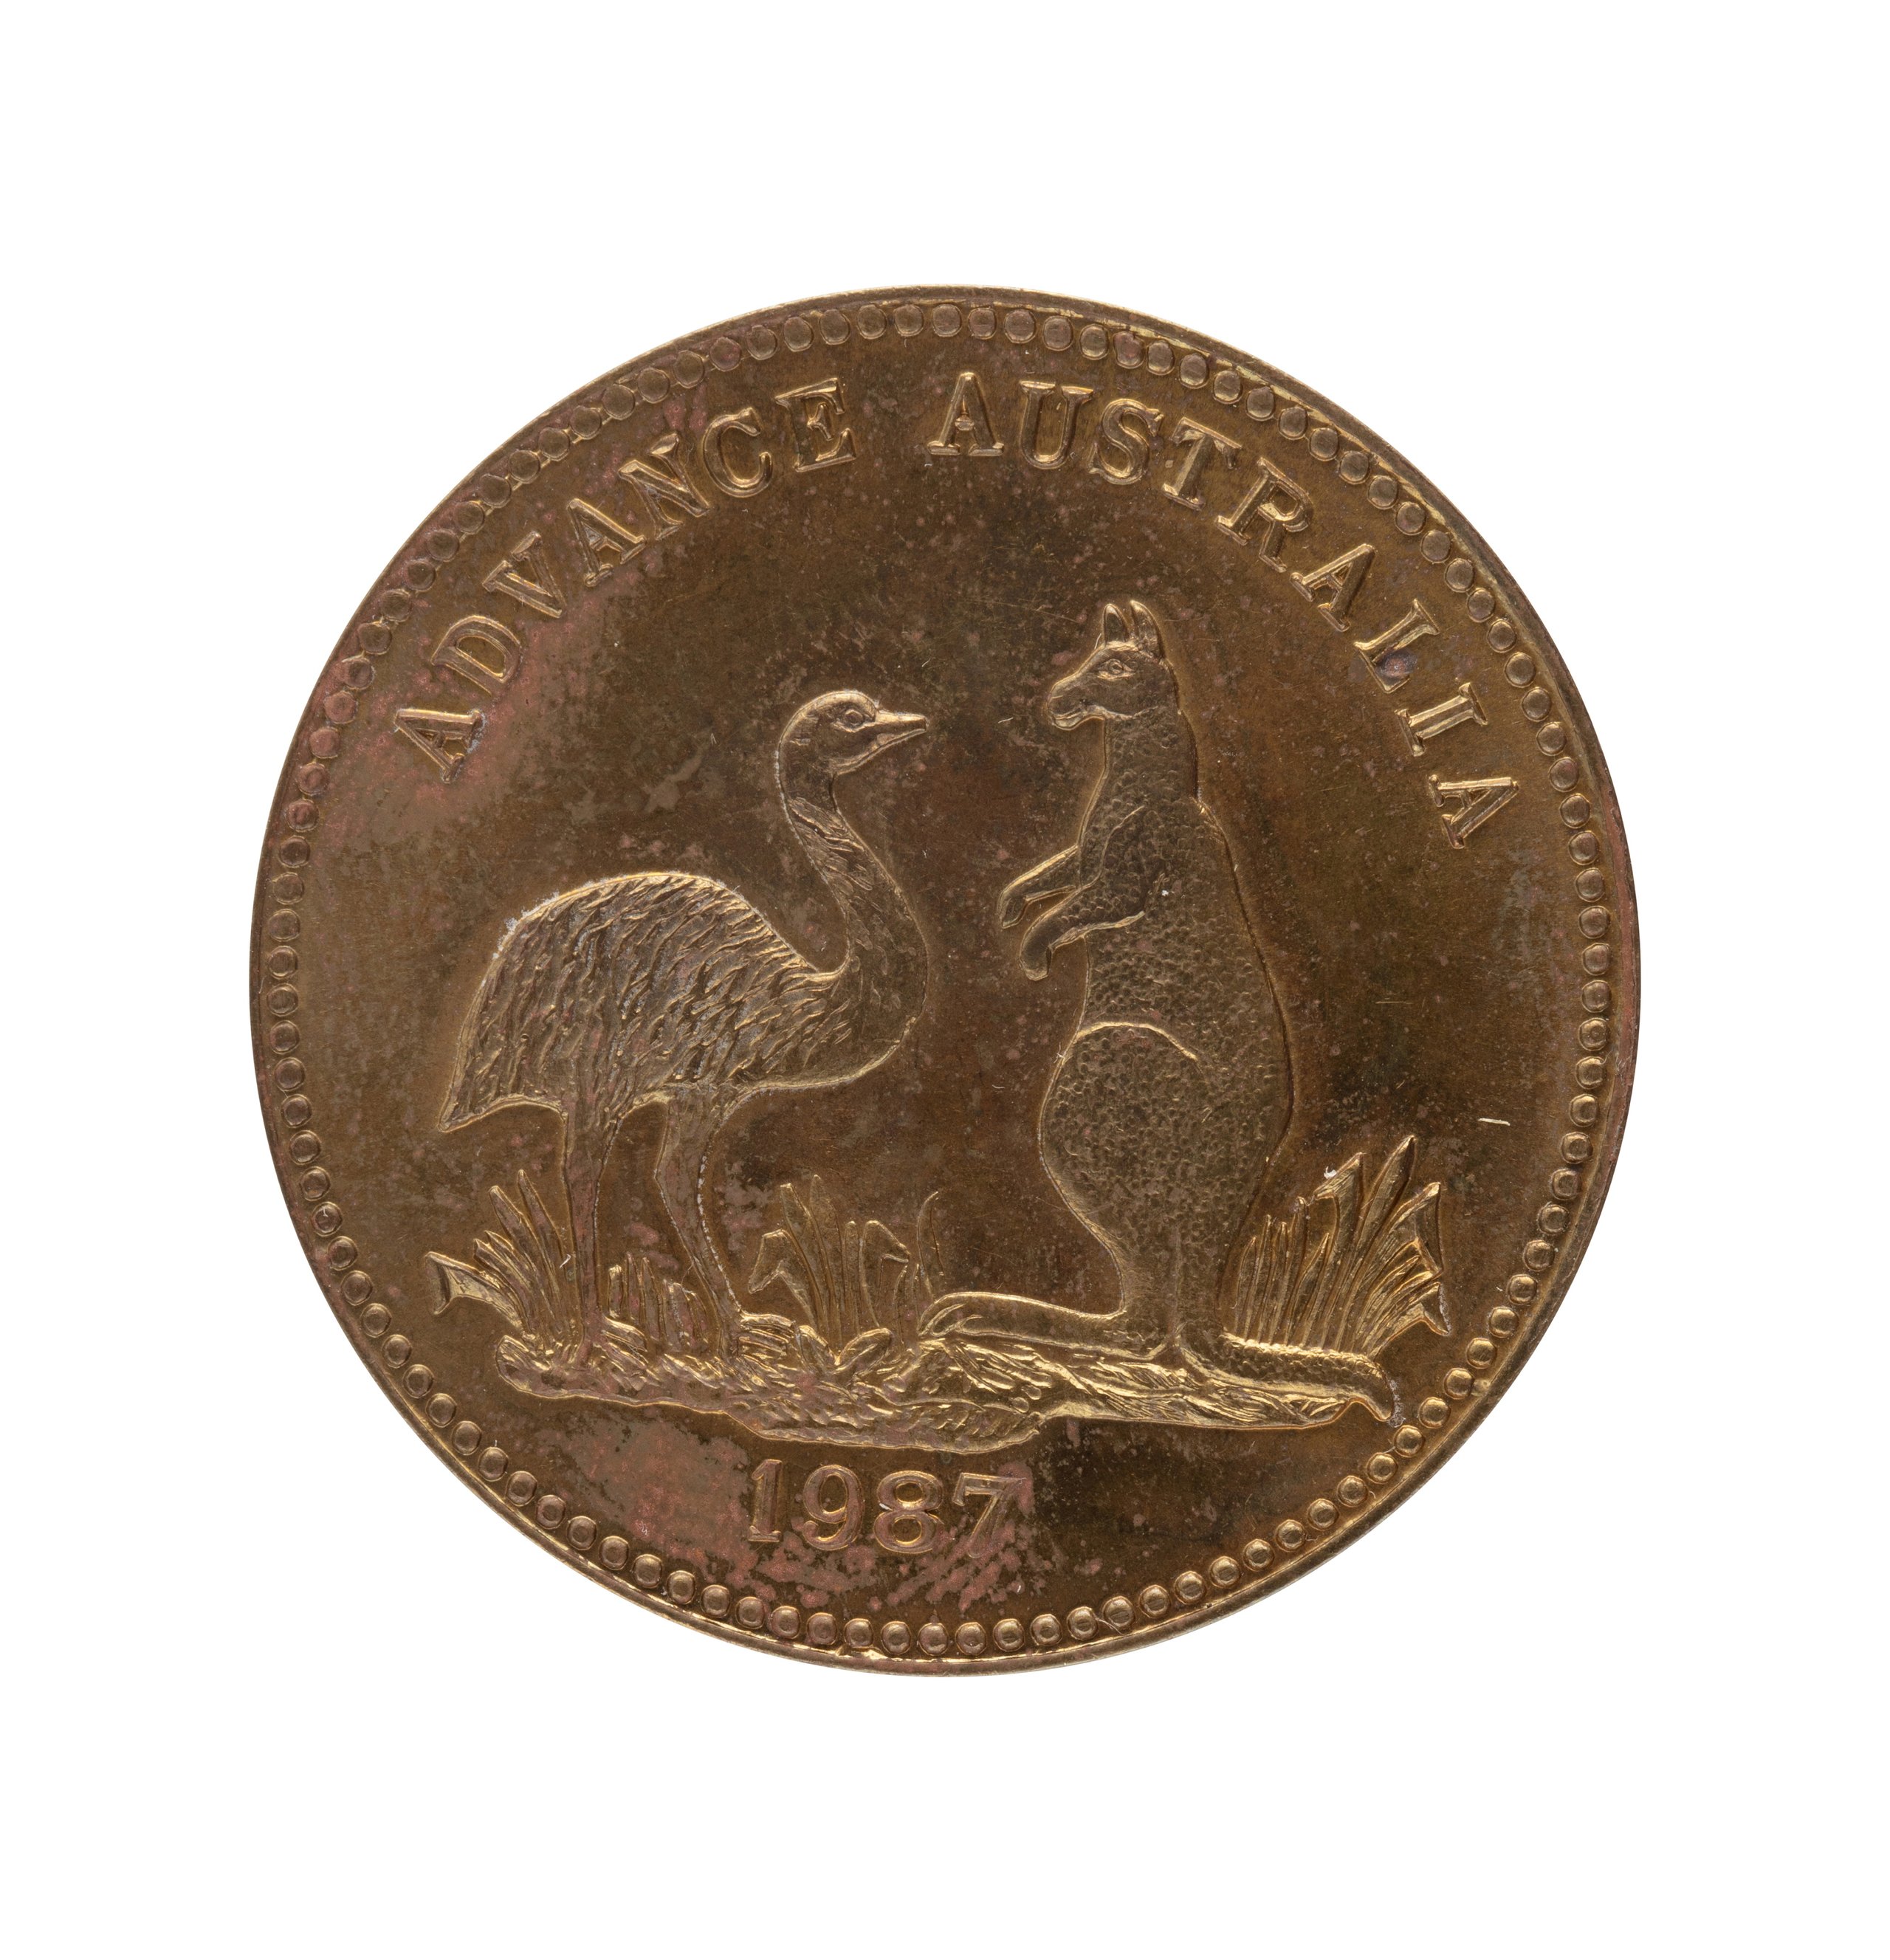 Australian token for Ian Armstrong Shoe Mart